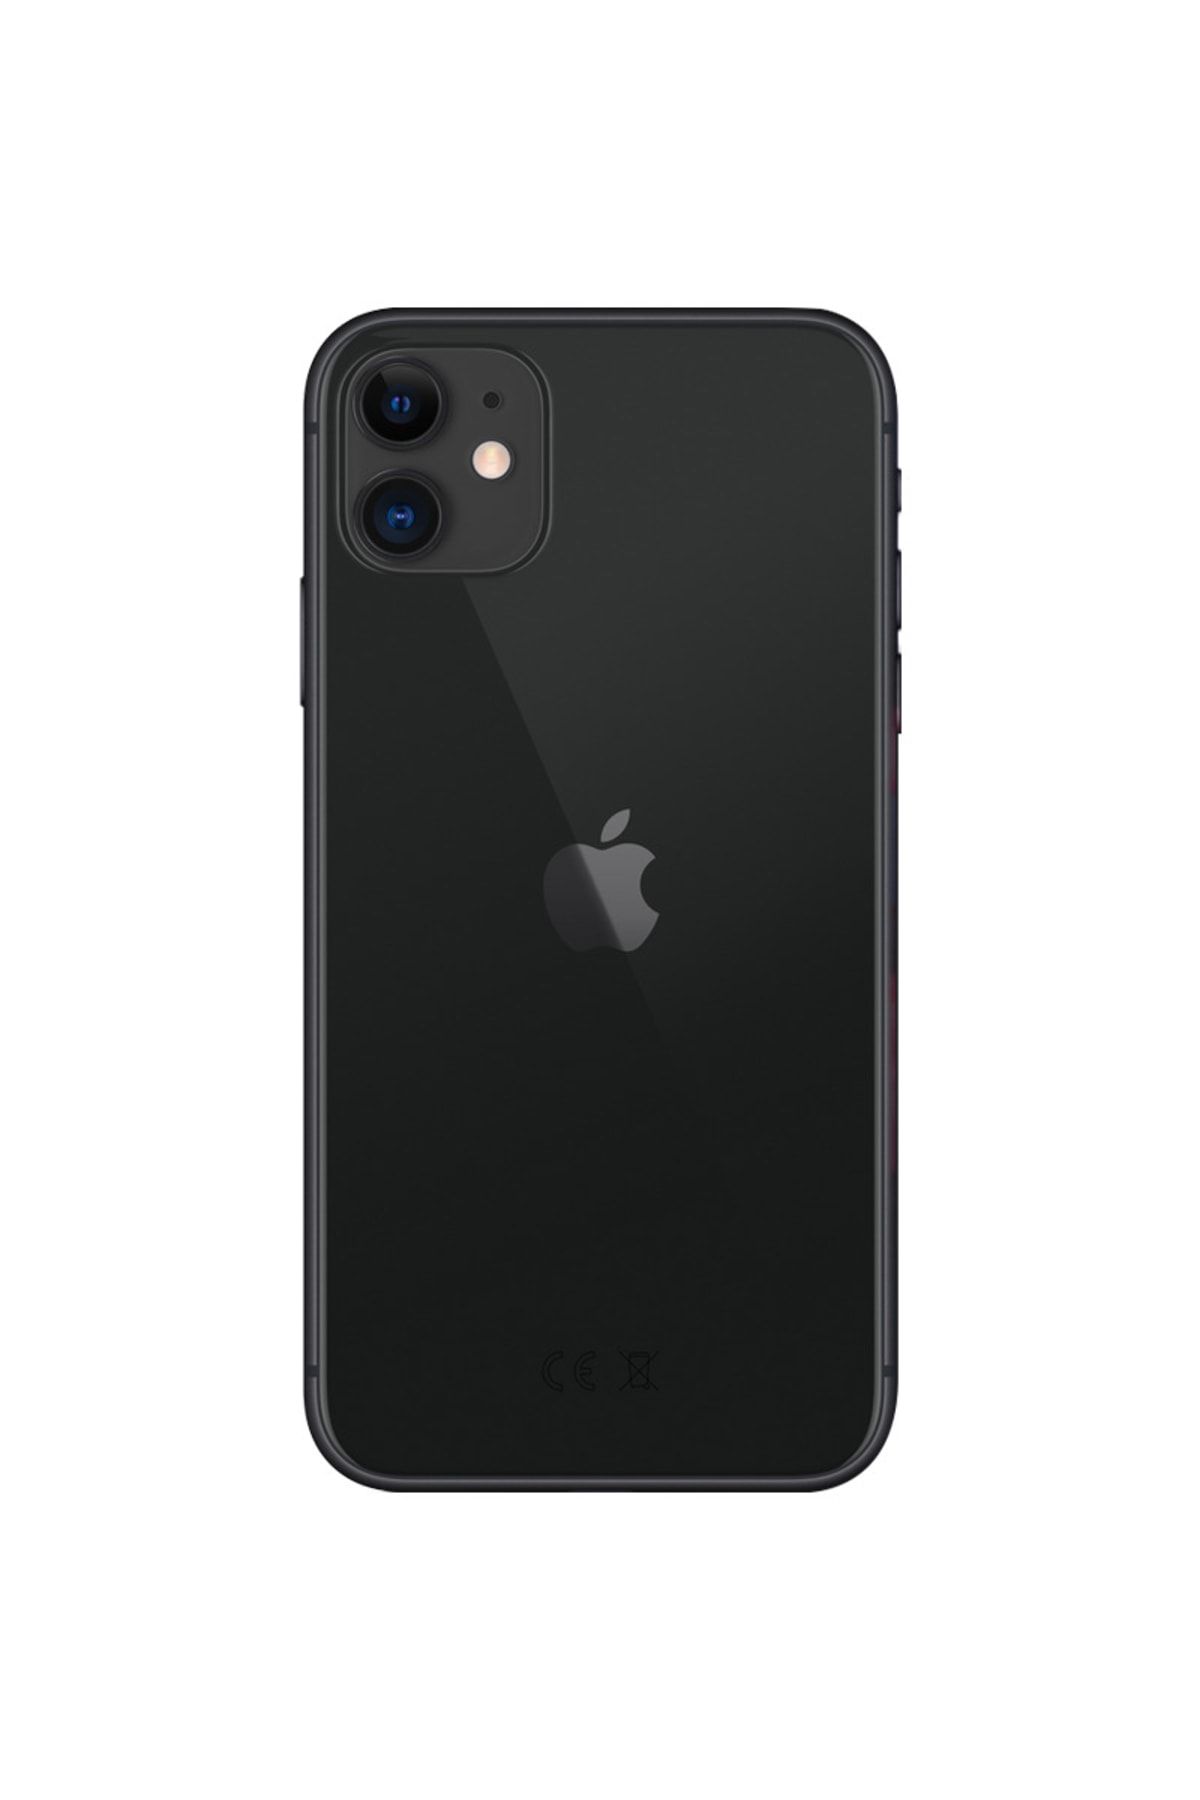 Apple Yenilenmiş iPhone 11 128 GB Siyah Cep Telefonu (12 Ay Garantili)